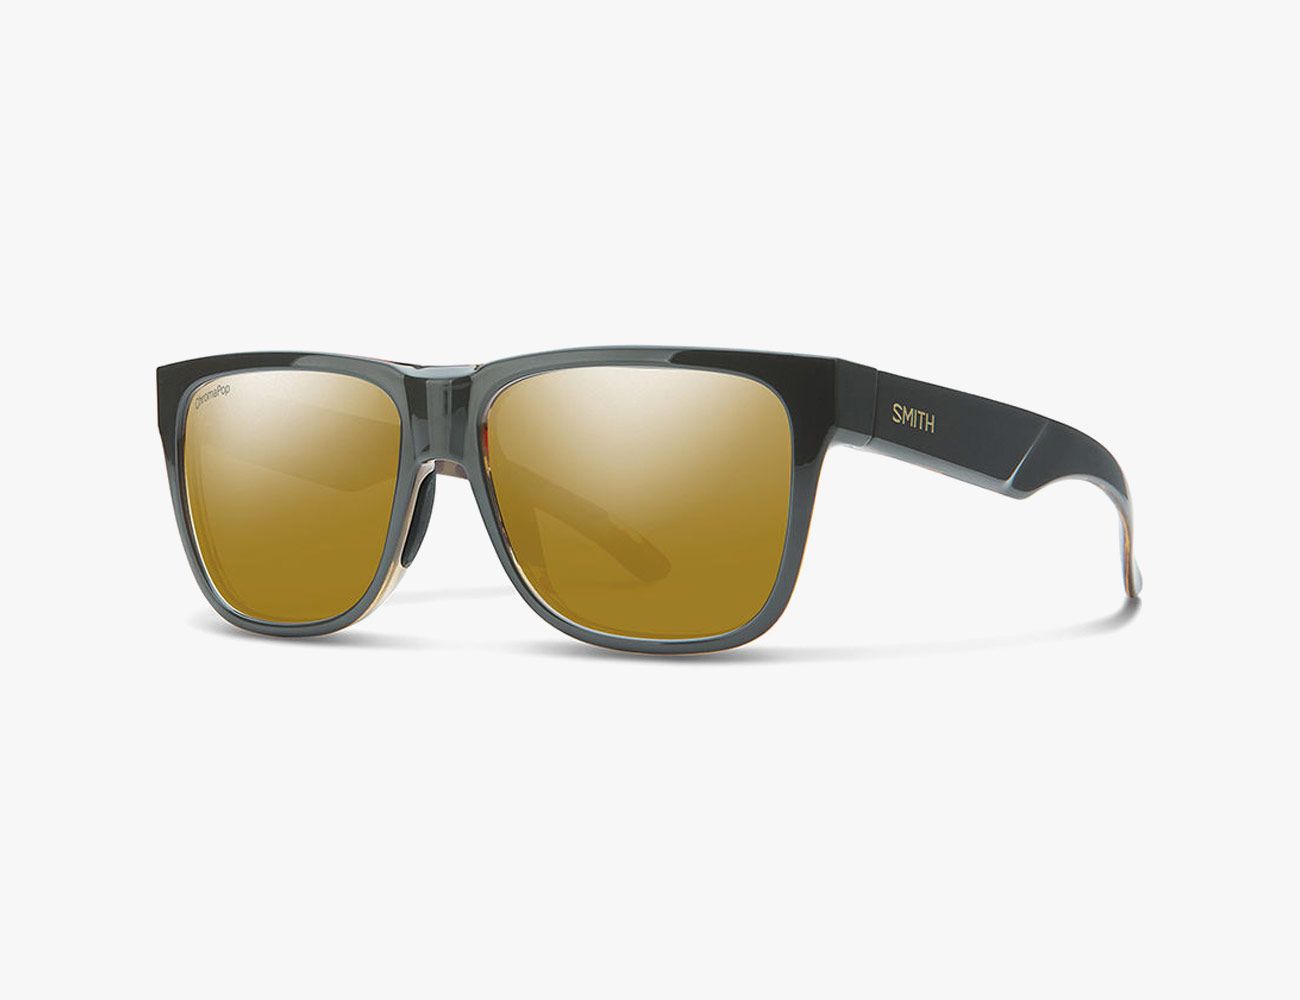 best sunglasses for running and biking